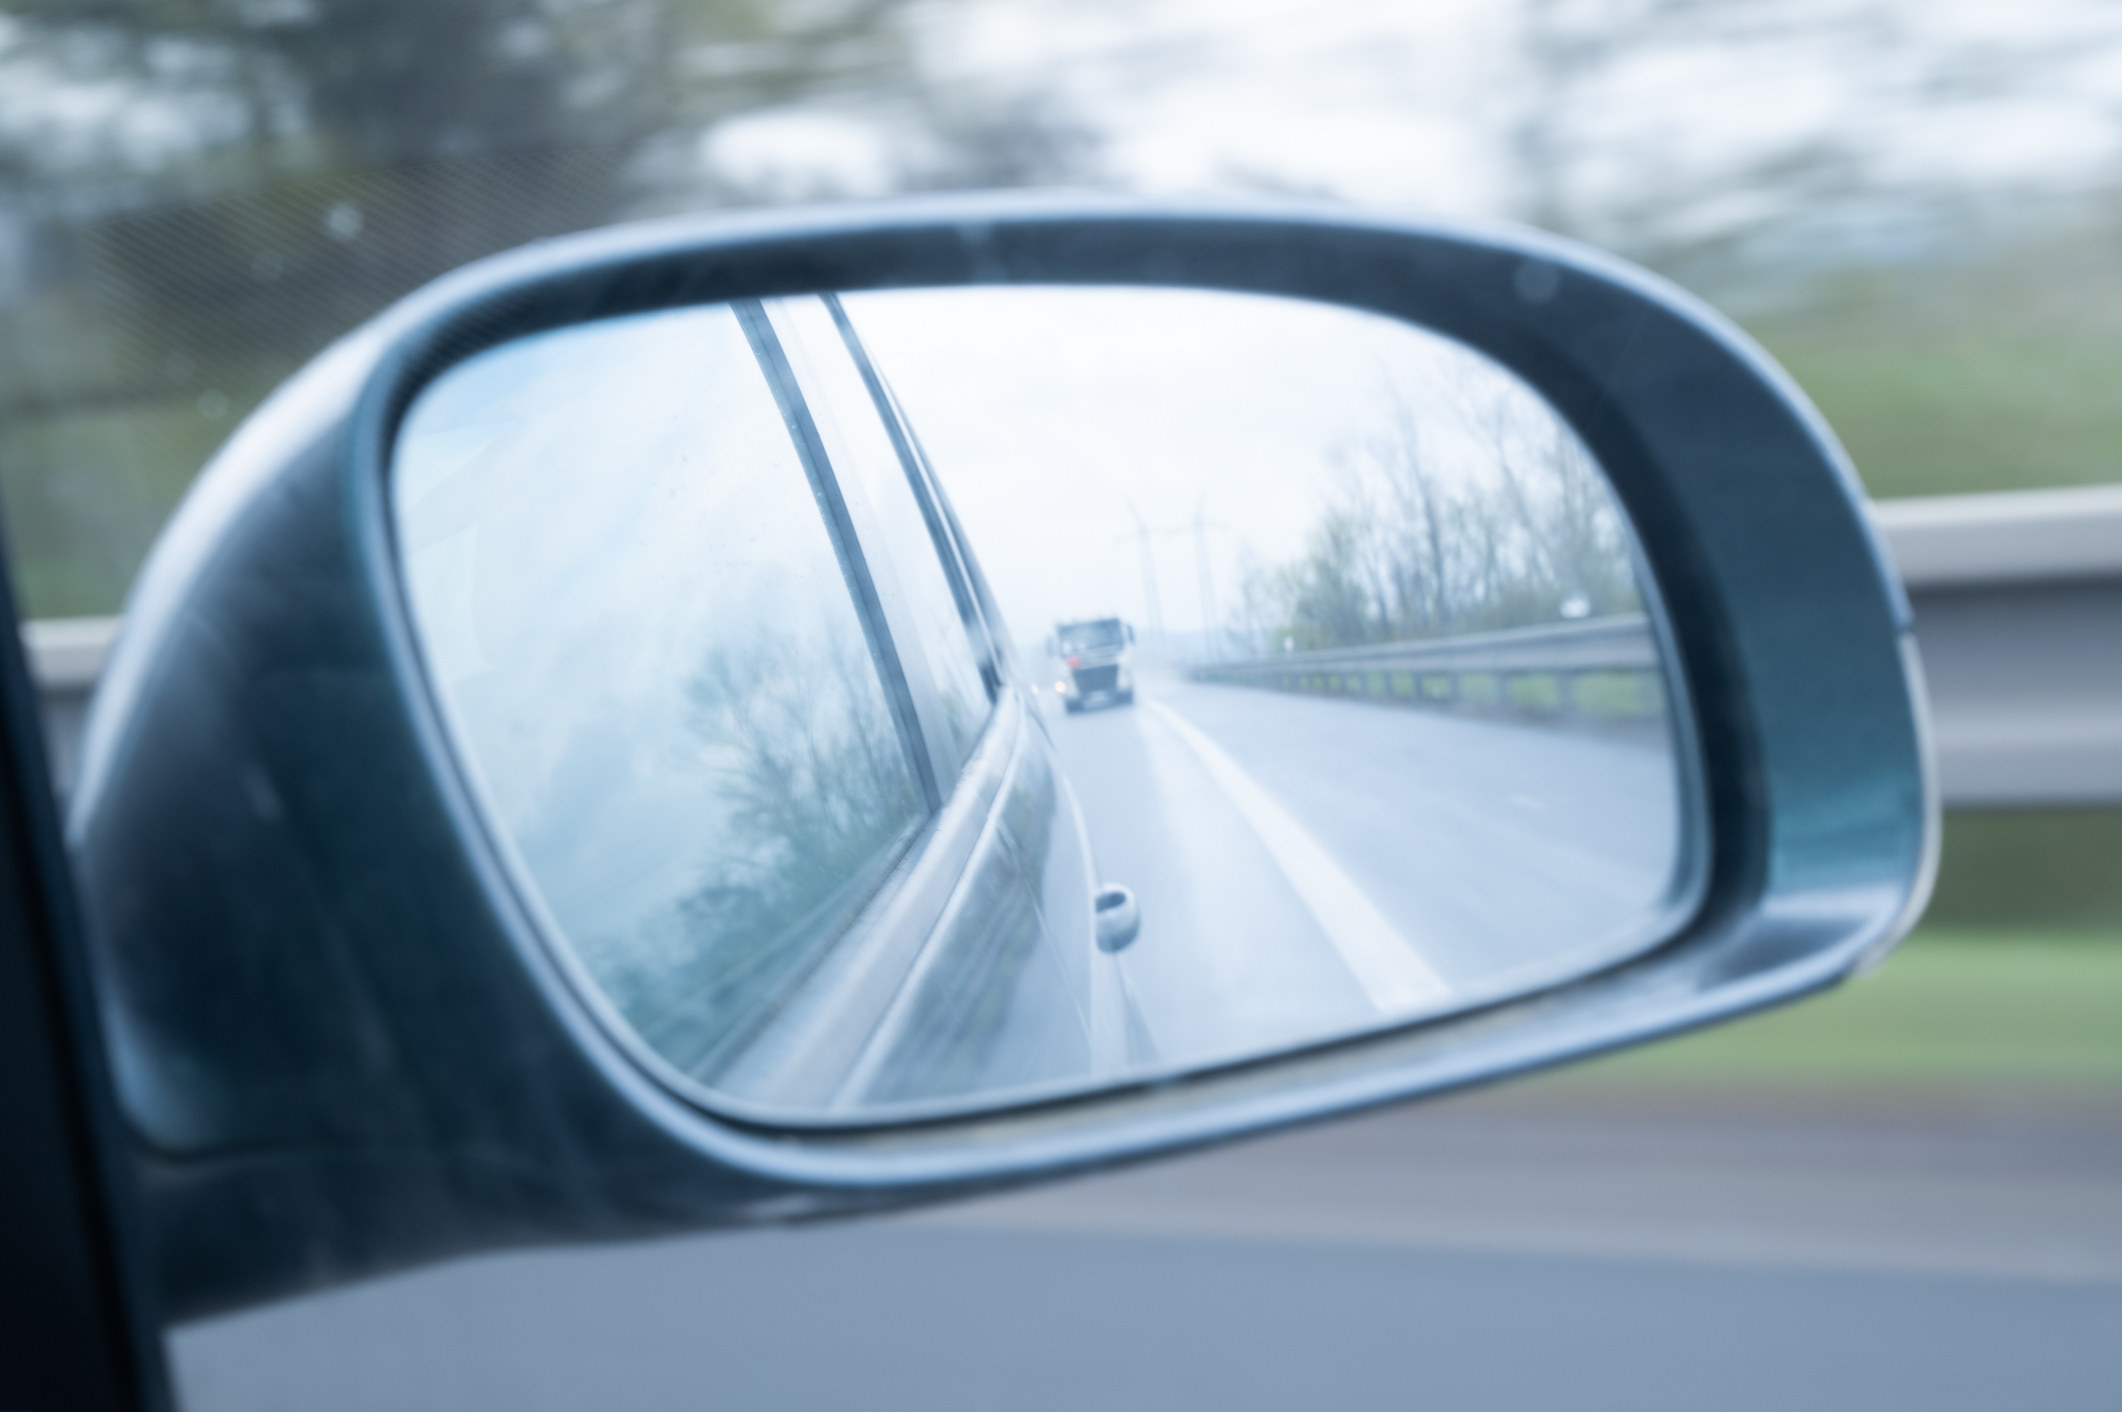 A car in the rear view mirror